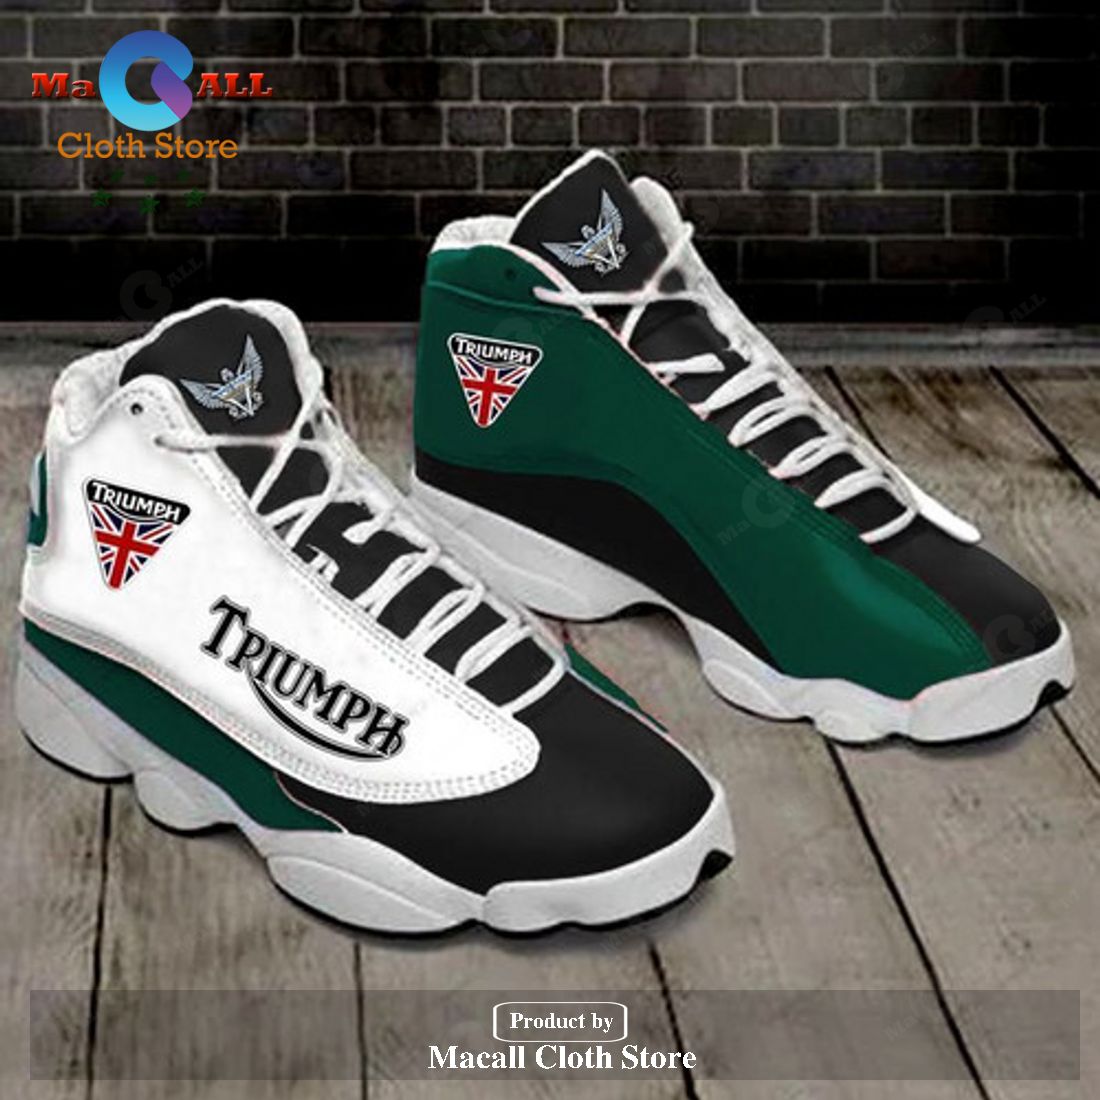 Triumph Air Jordan 13 Sneakers - Motor sneakers Gift Shoes For Fan POD ...